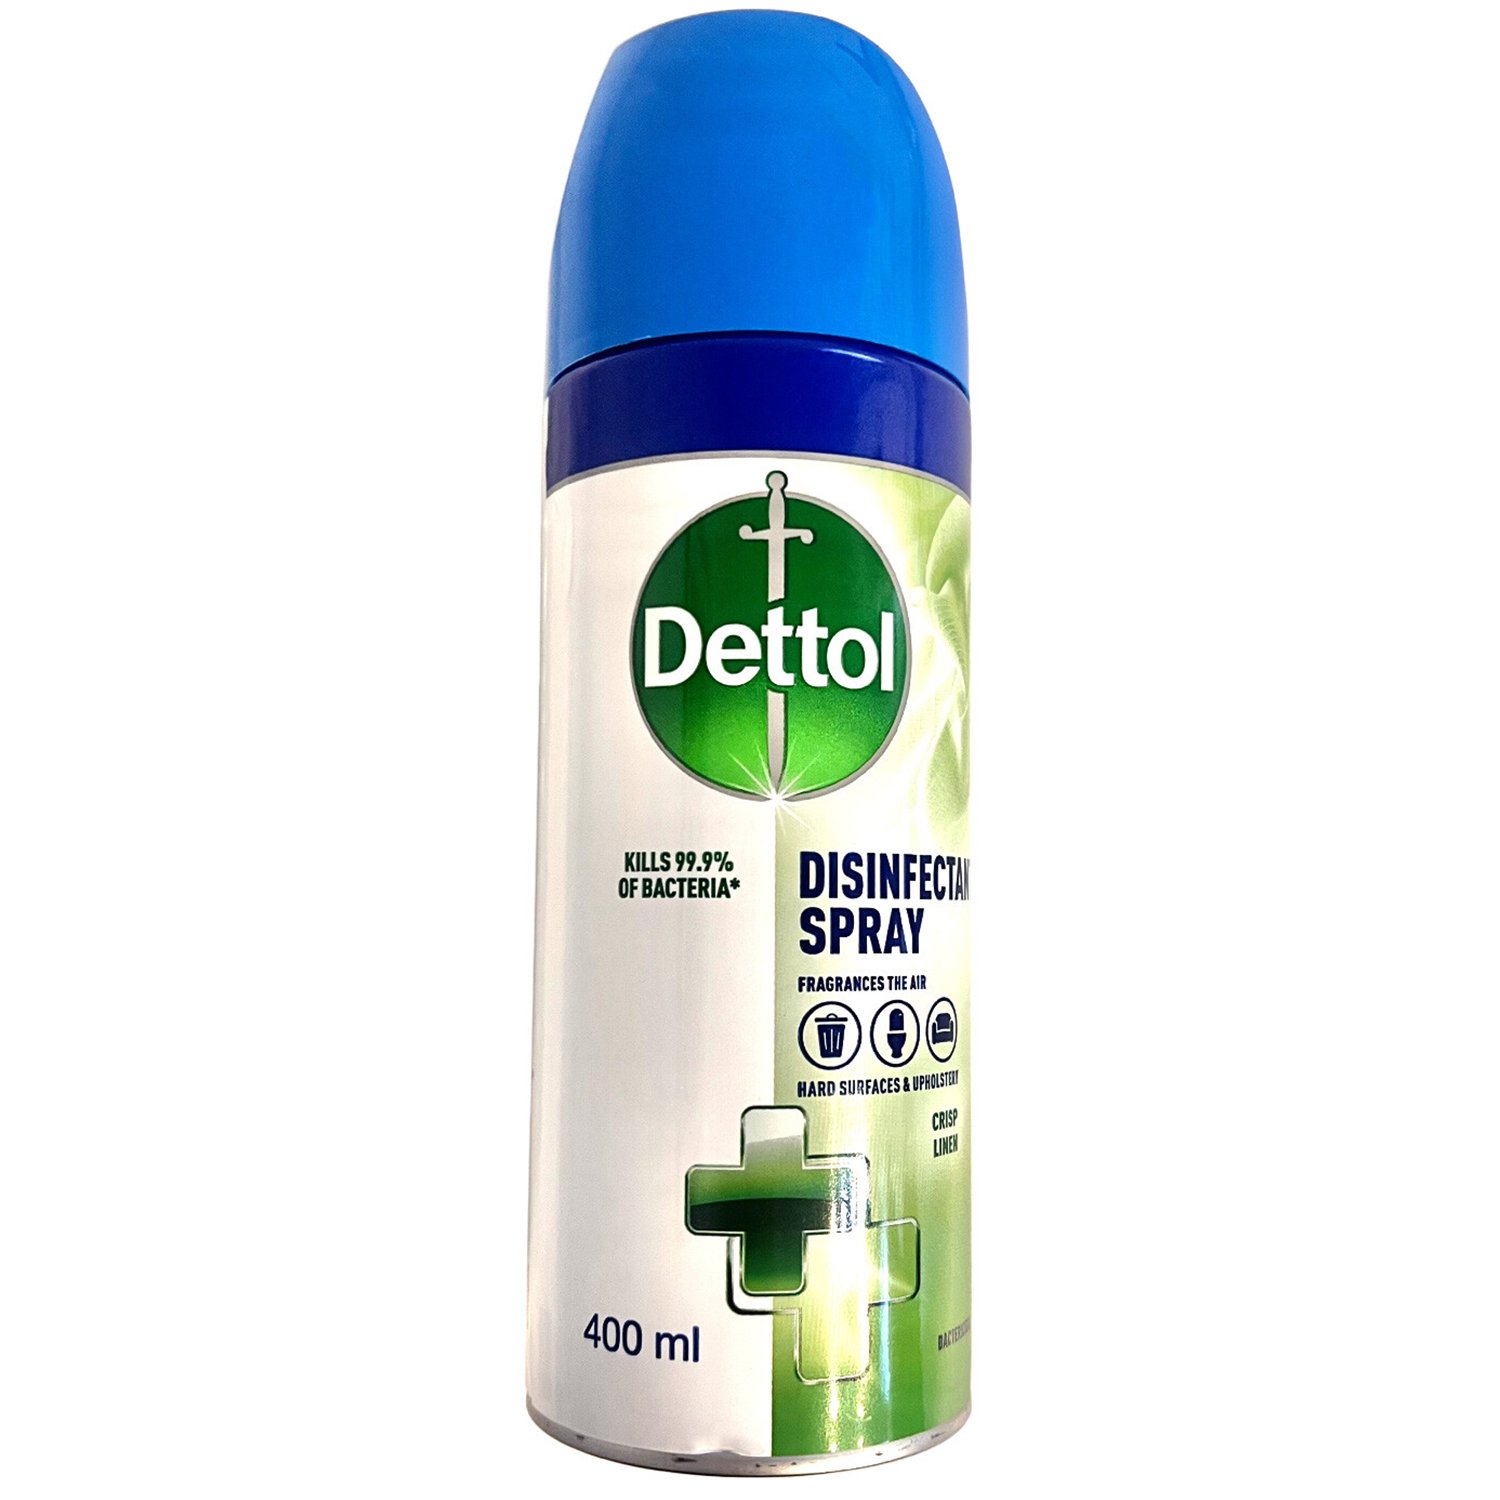 Dettol Disinfectant Spray Image 1